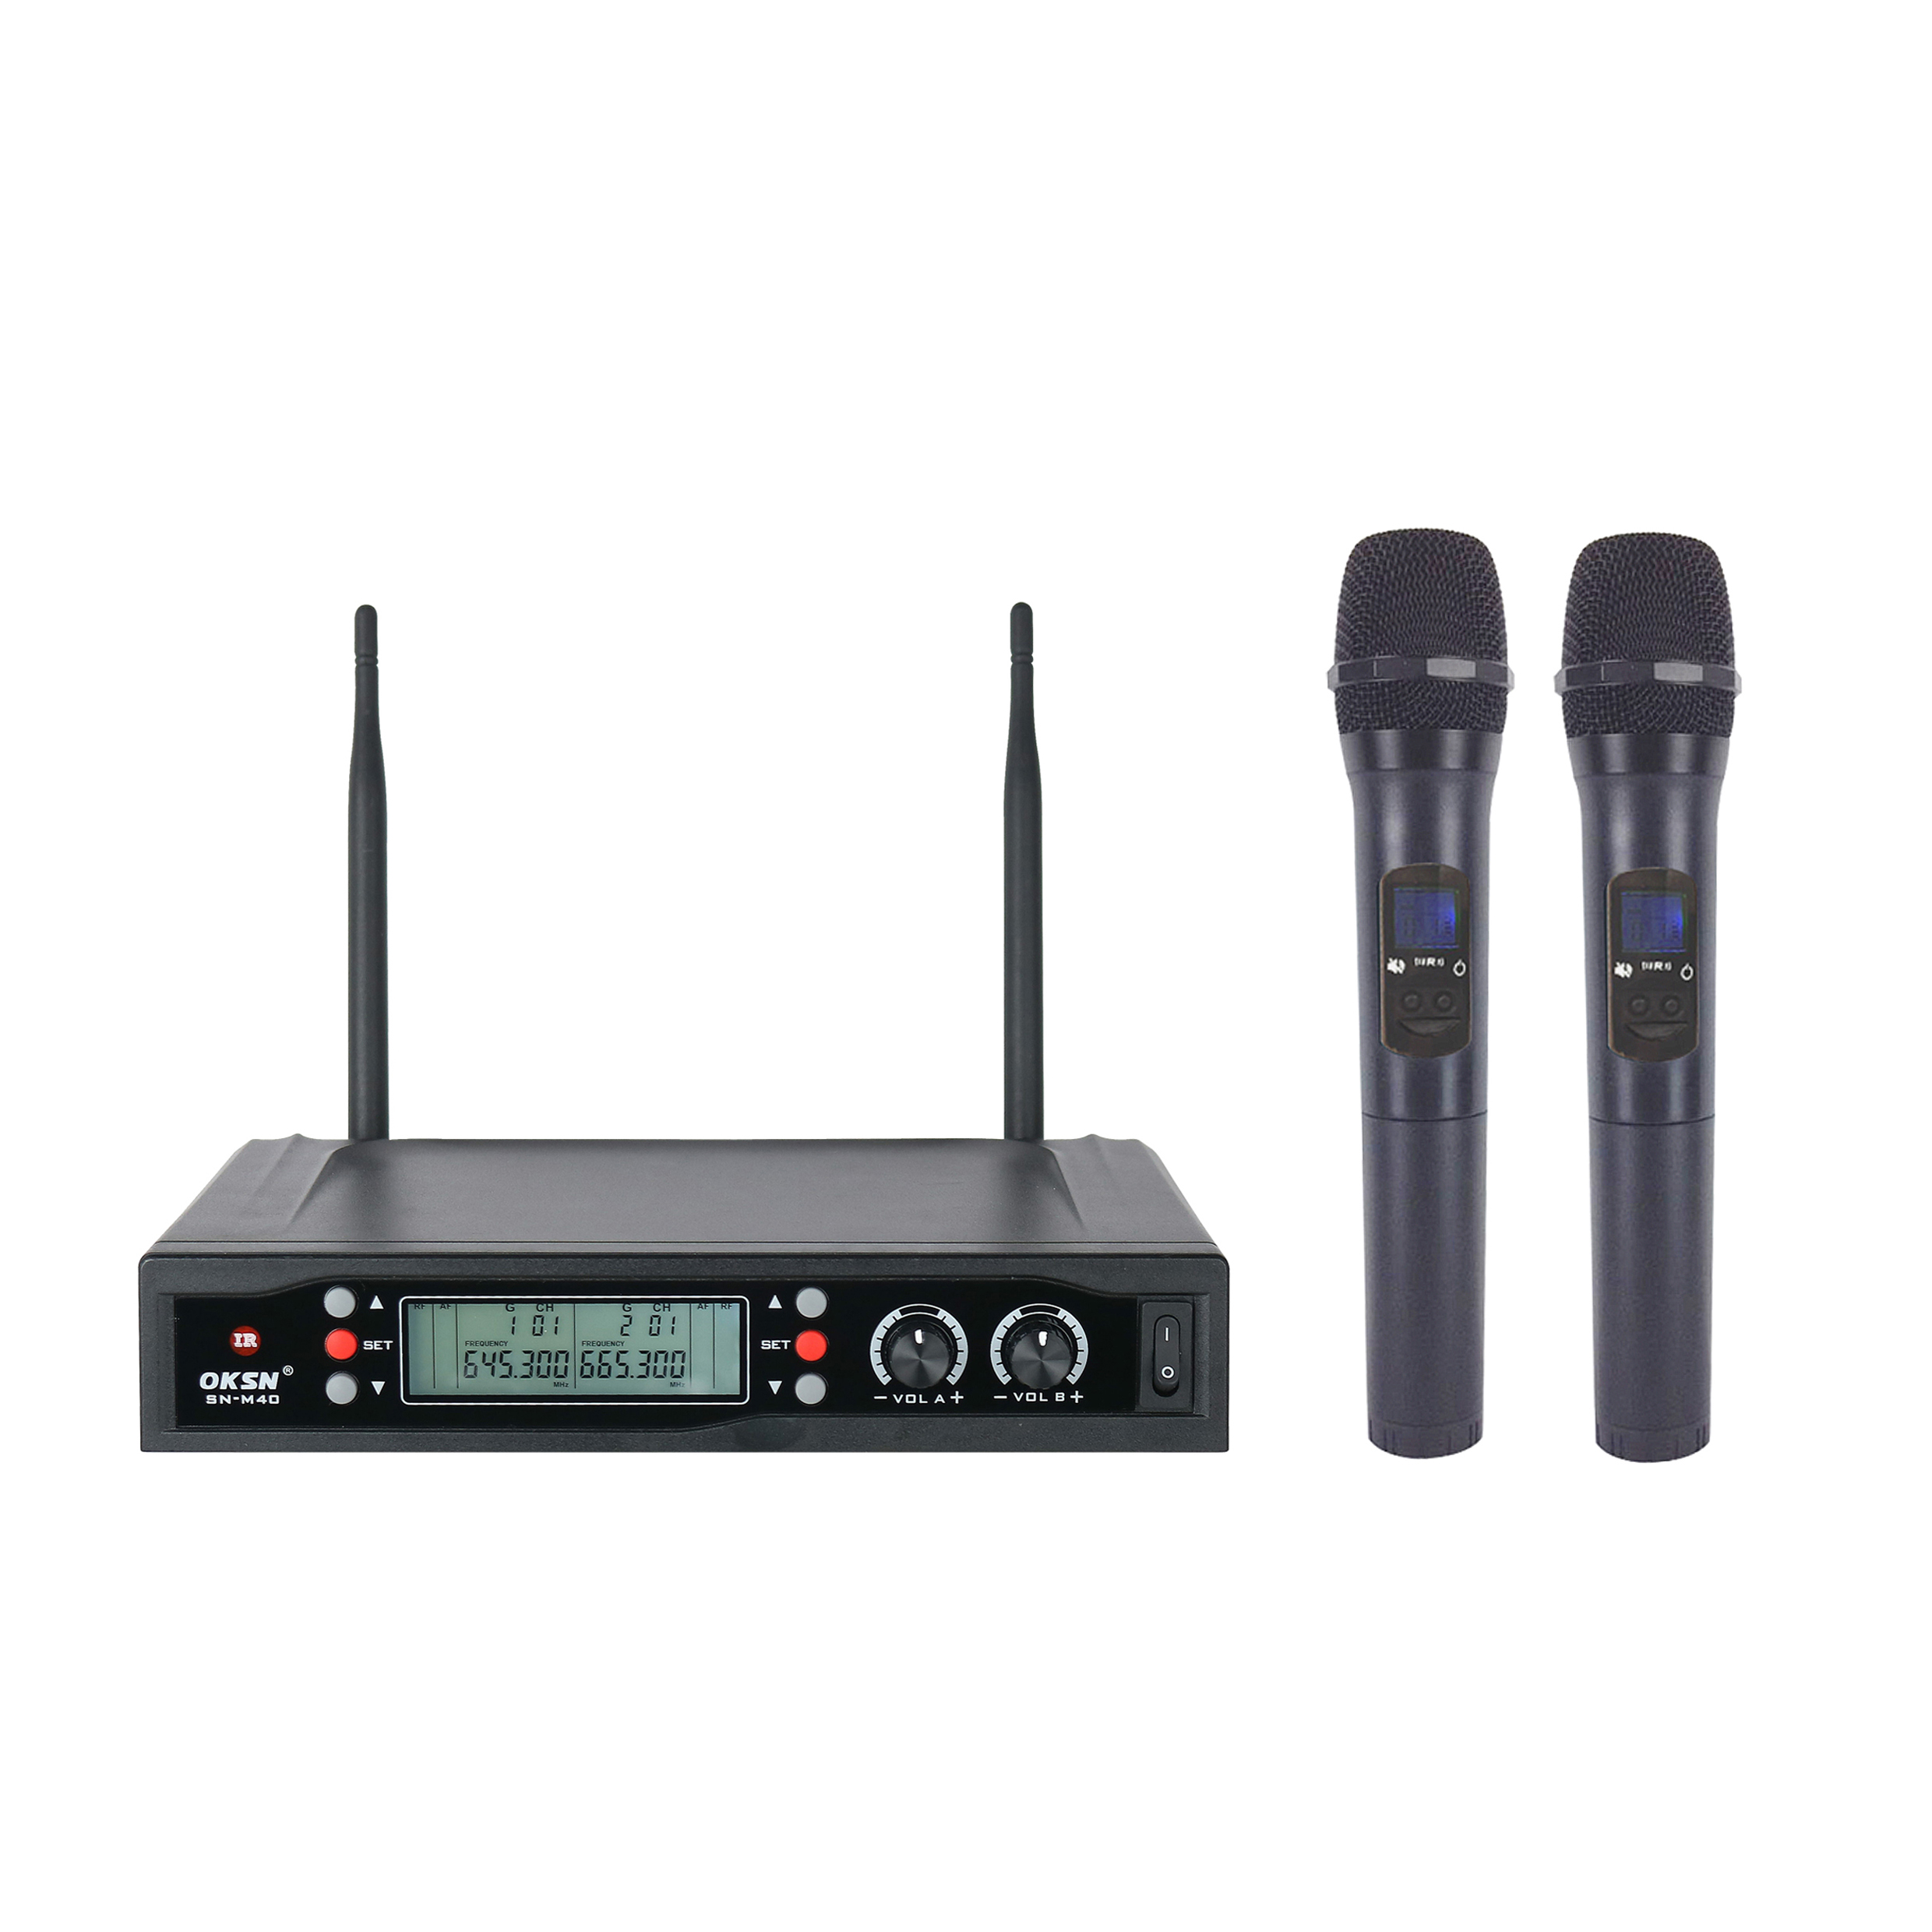 UHF Wireless Microphone Manufacturers